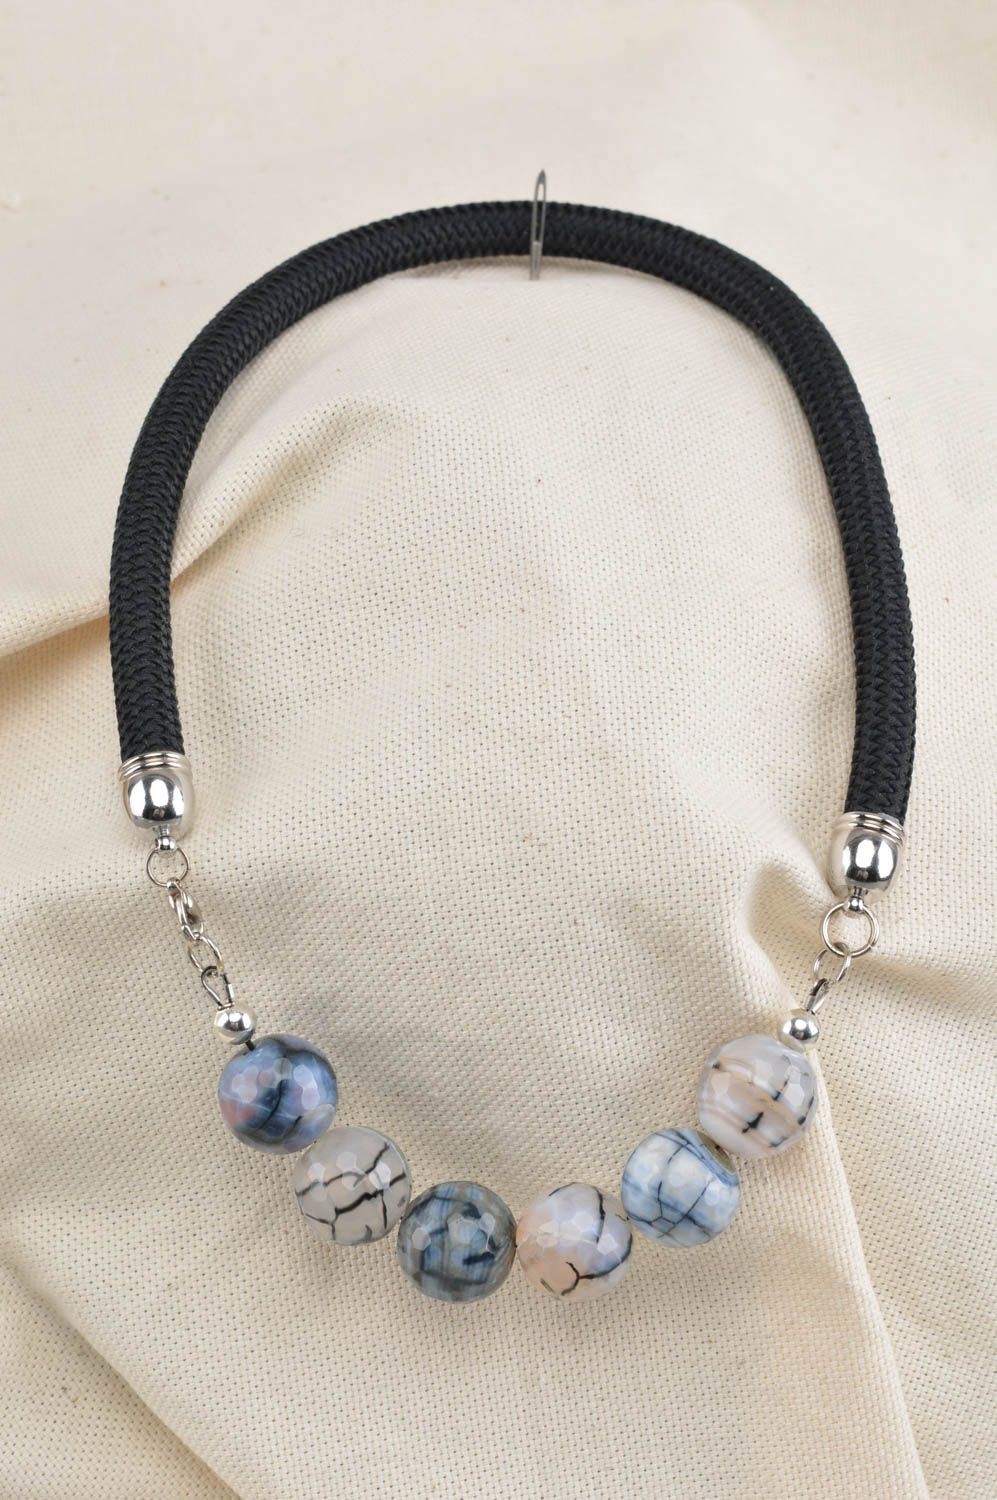 Handmade gemstone necklace designer accessories fashionable jewelry gift idea photo 1